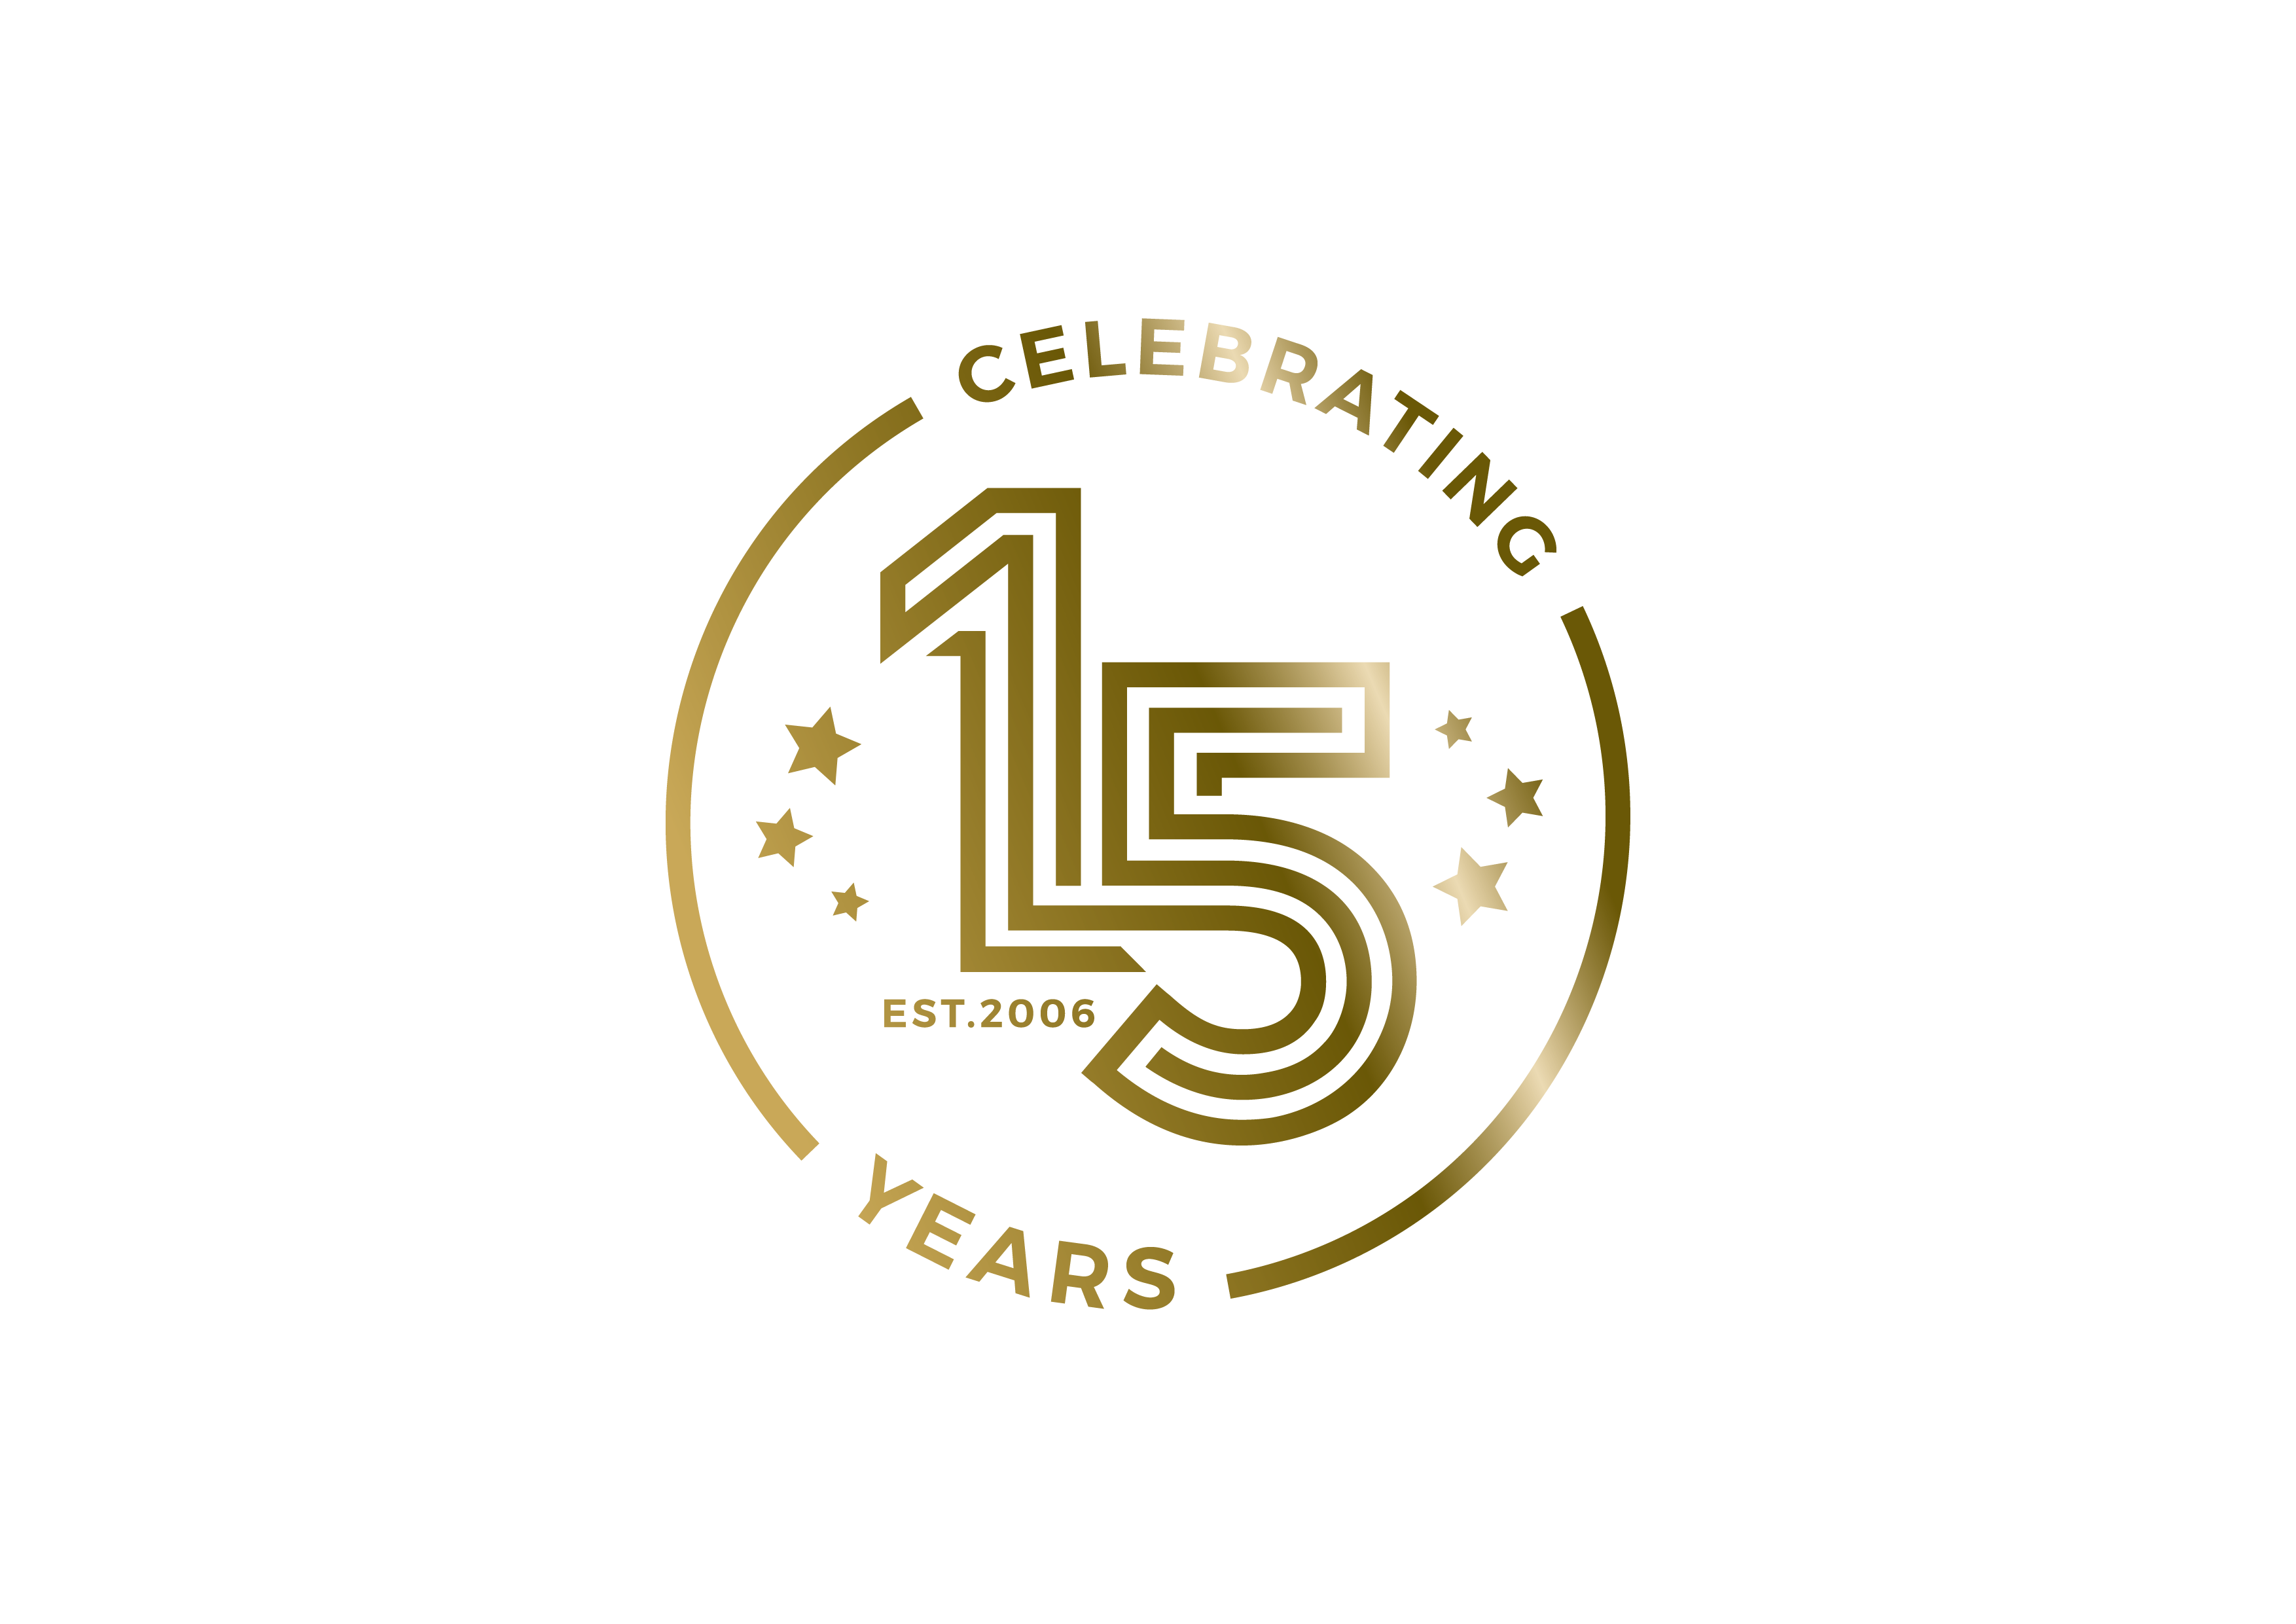 15th Anniversary Logo